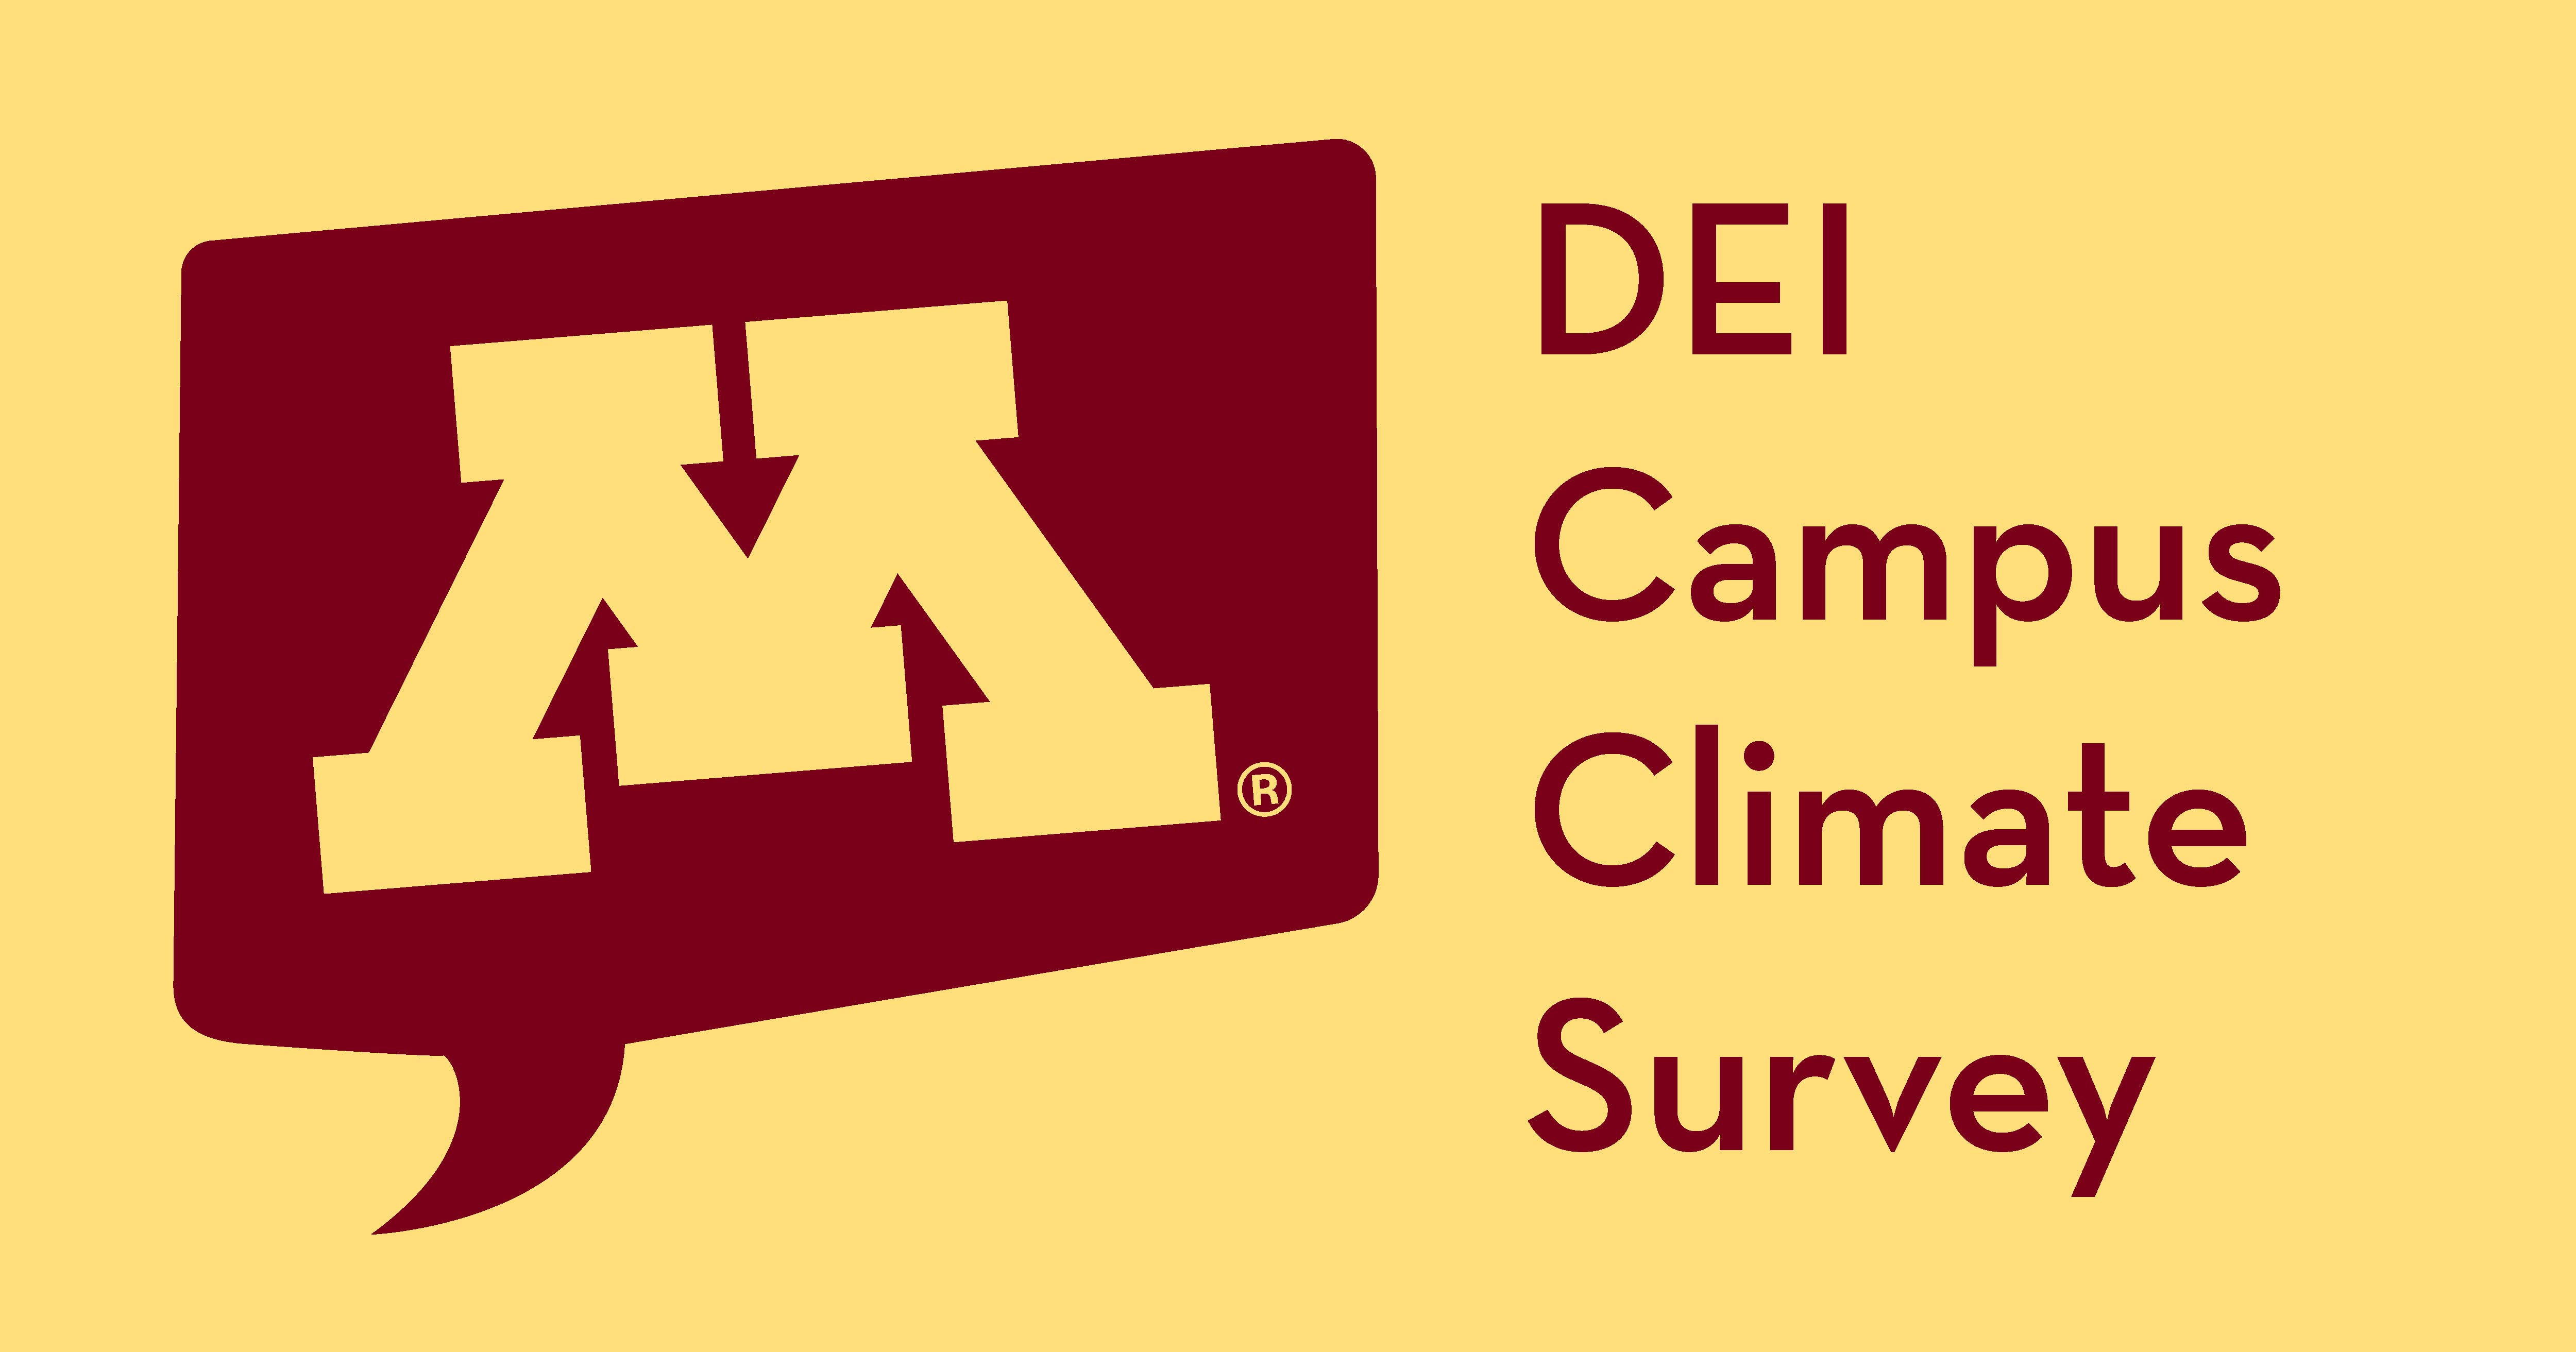 DEI Campus Climate Survey Results